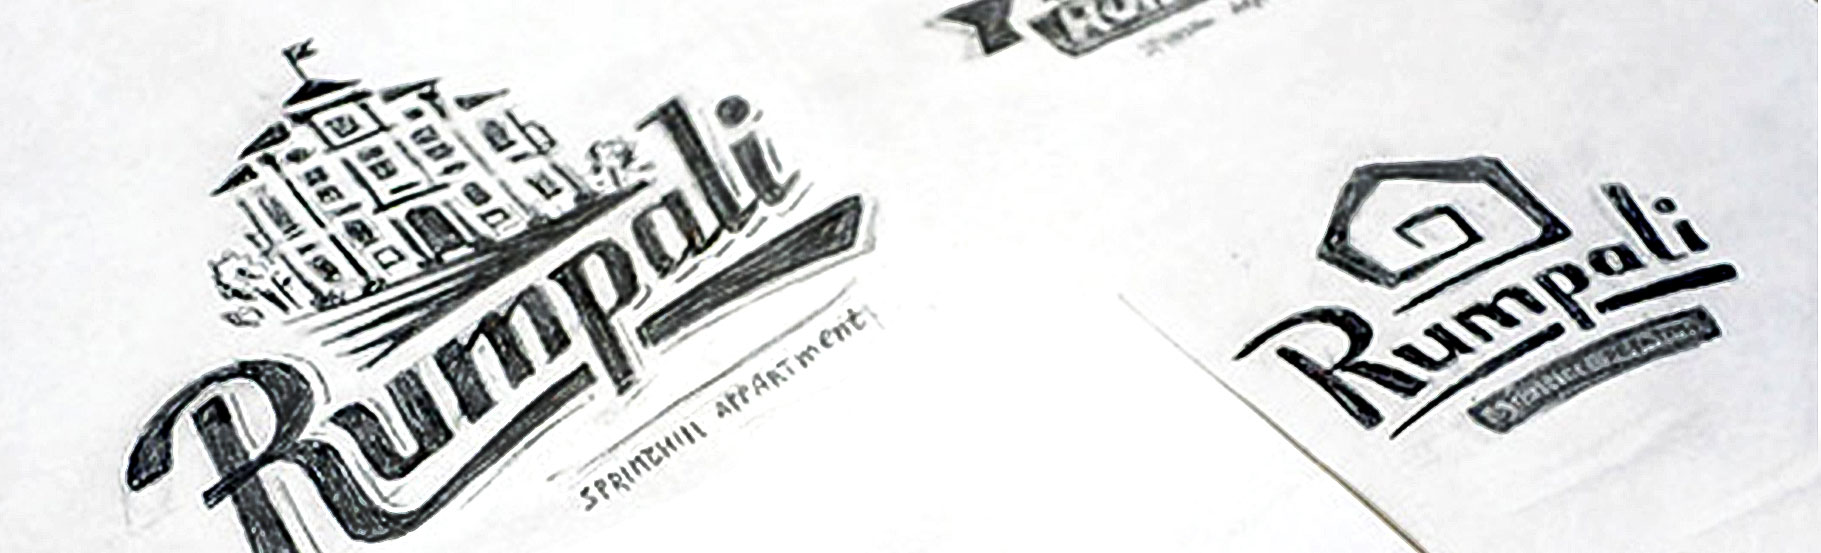 rumpali logo skica